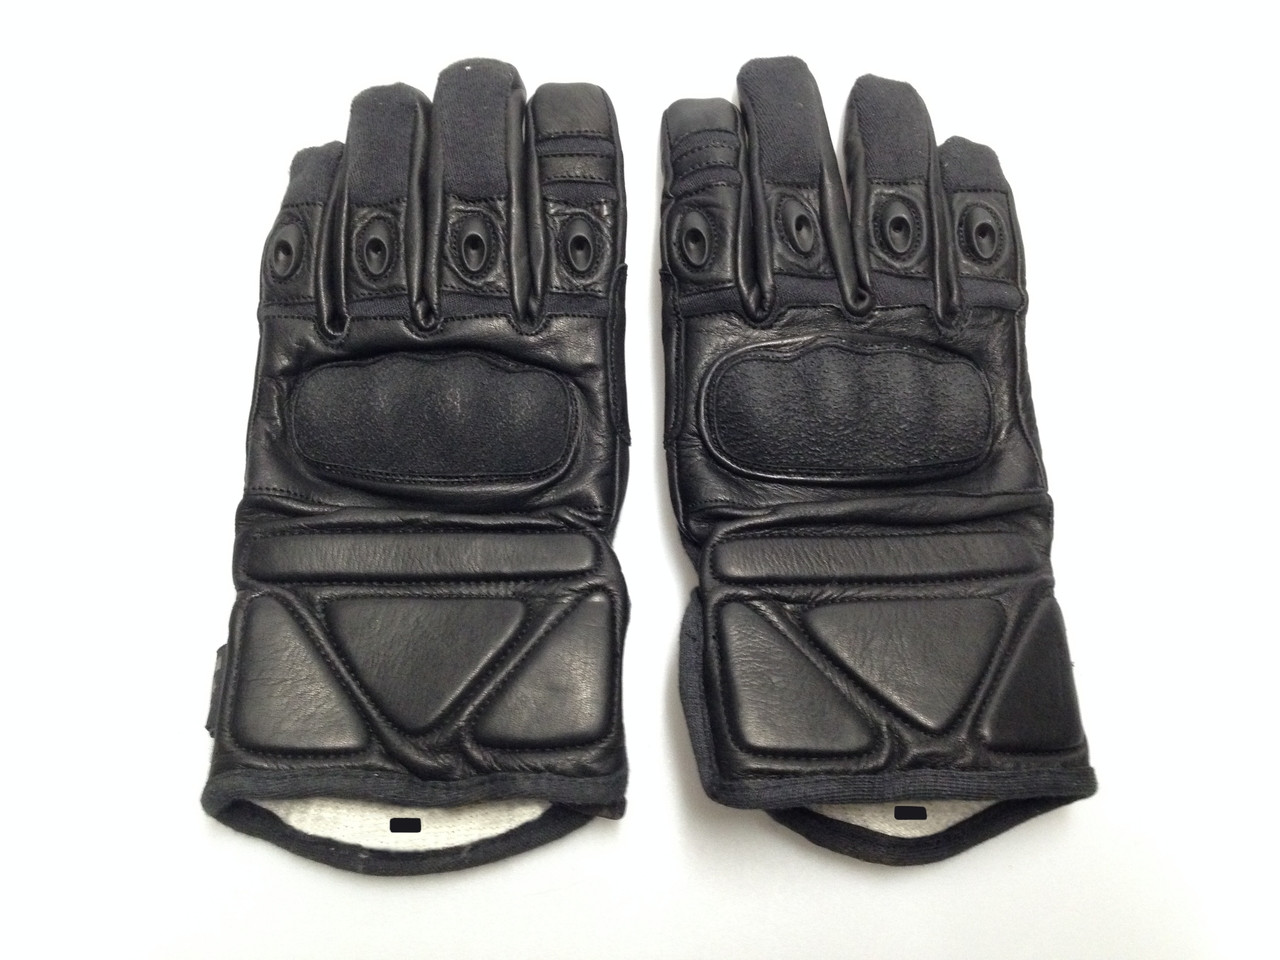 Extreme Duty Combat Gloves - Cut Level 5 (Size M-Regular) Black